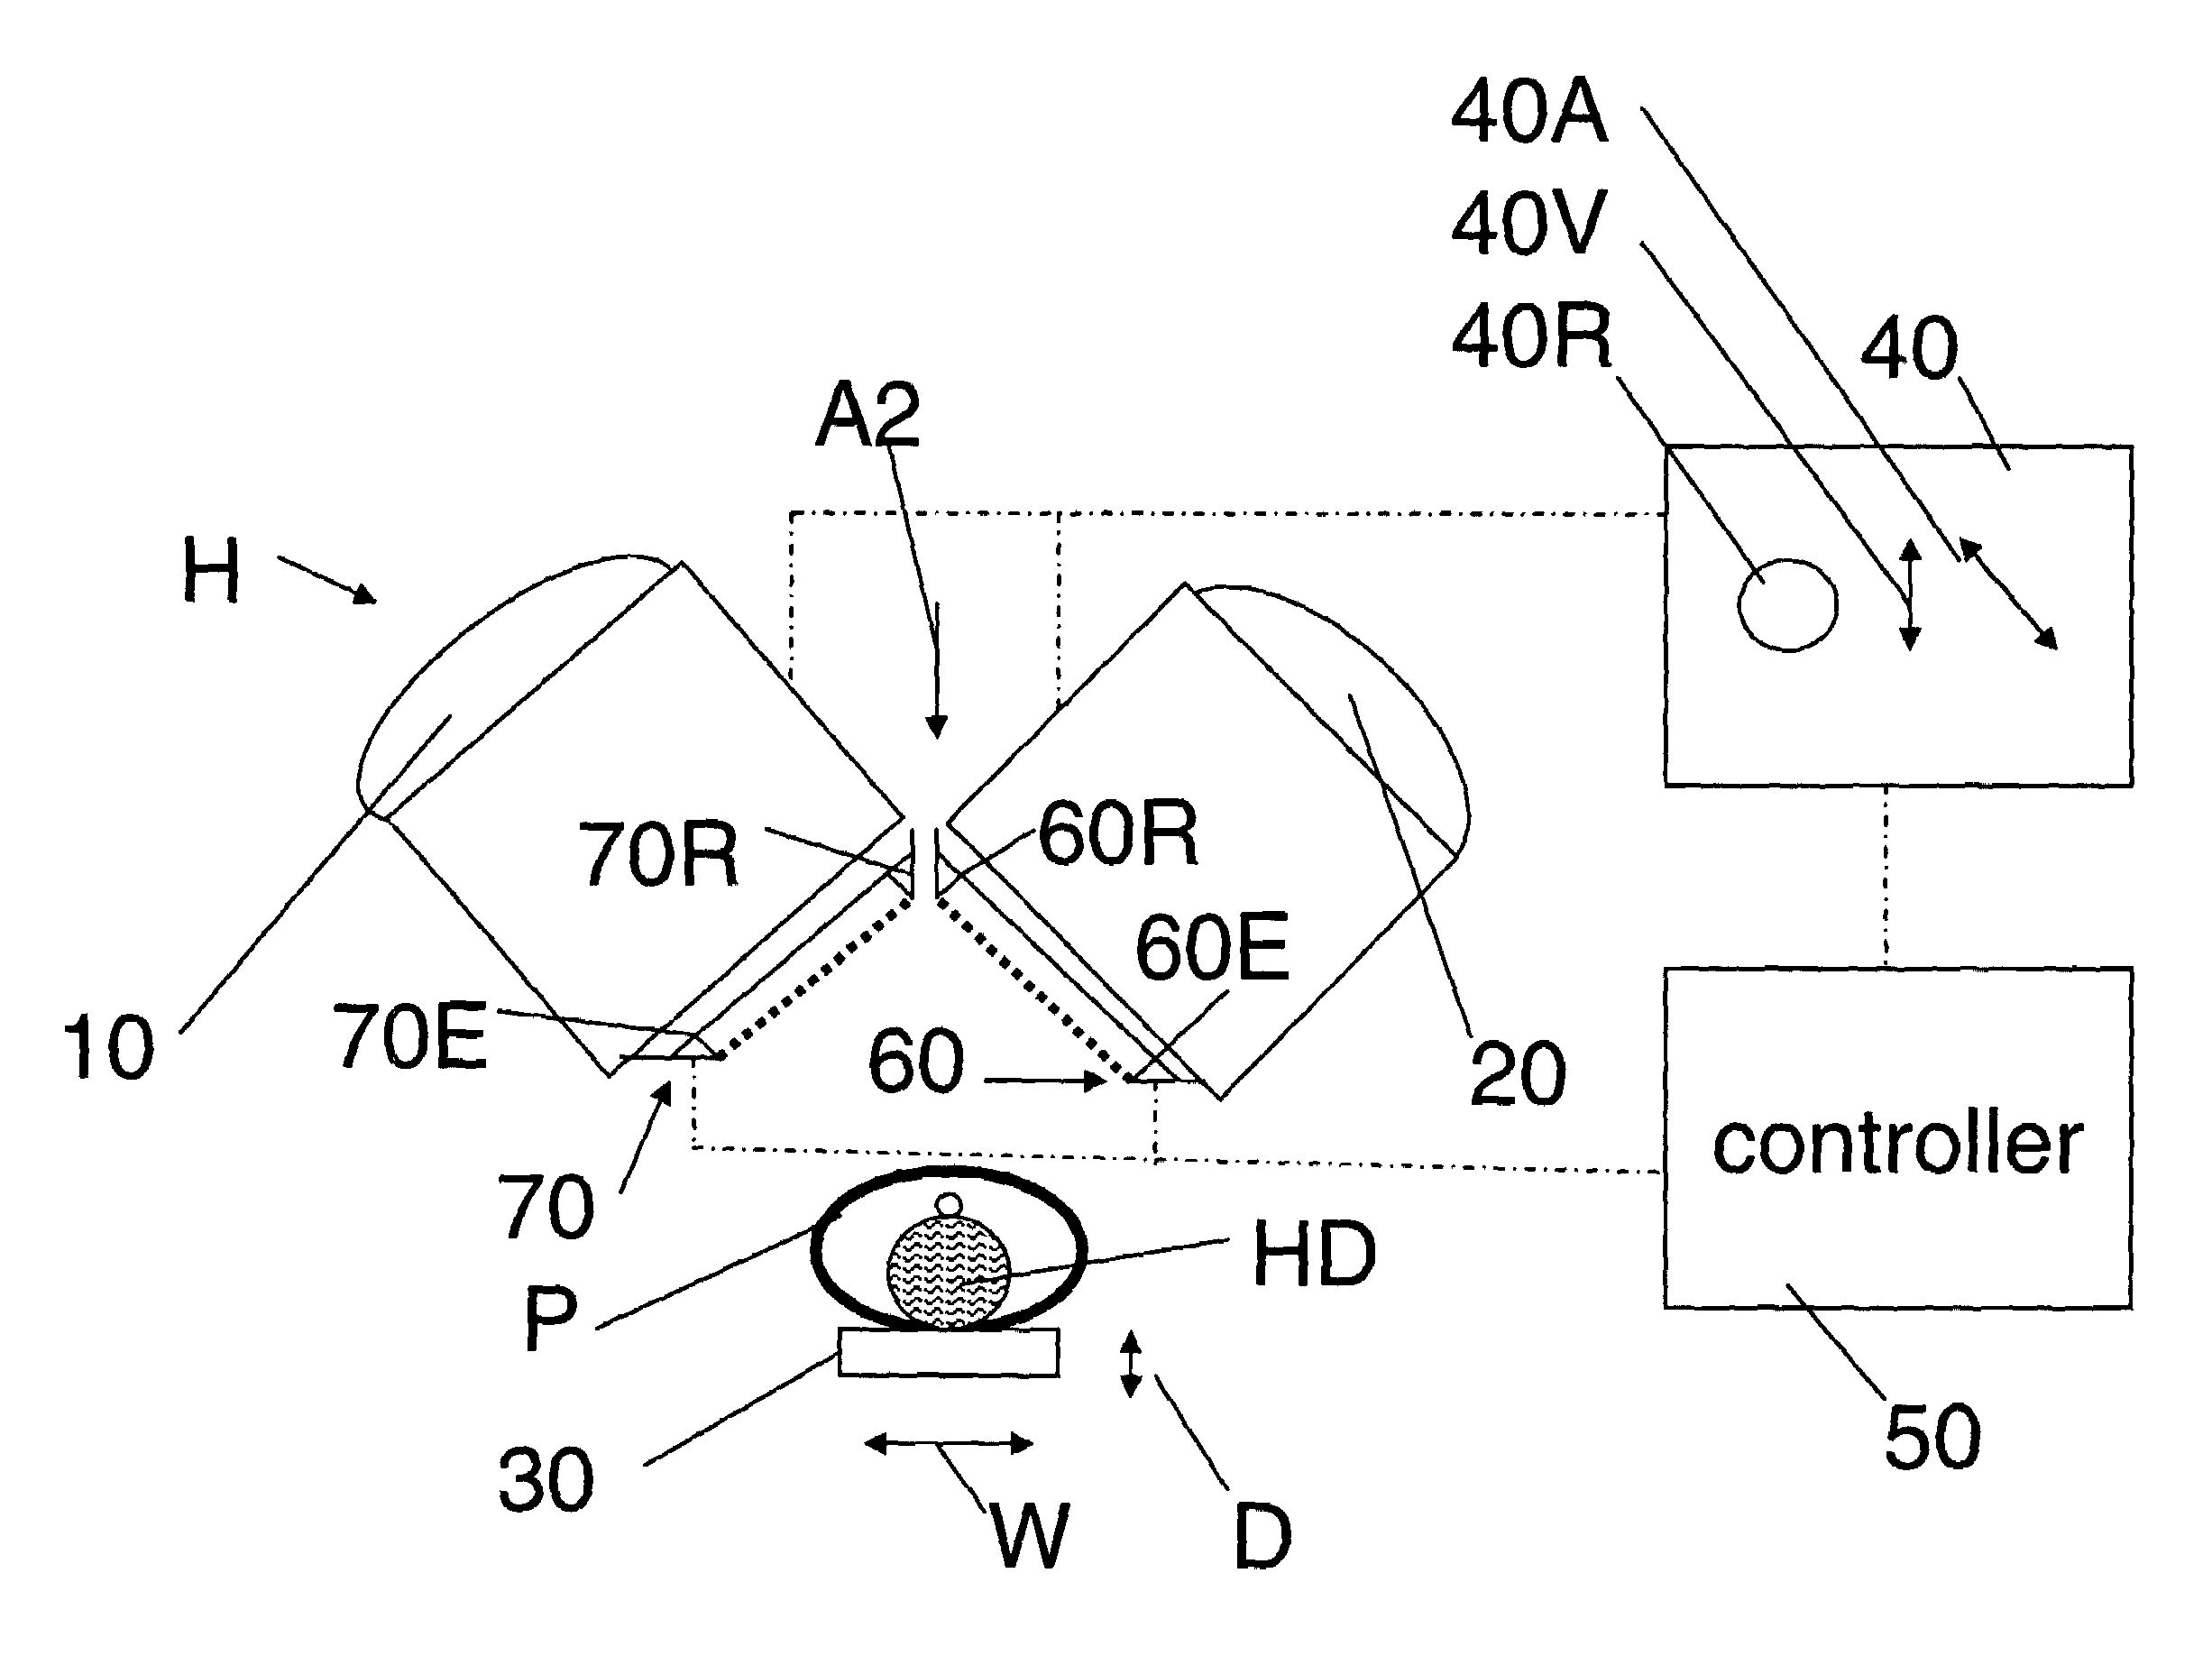 Non-circular-orbit detection method and apparatus